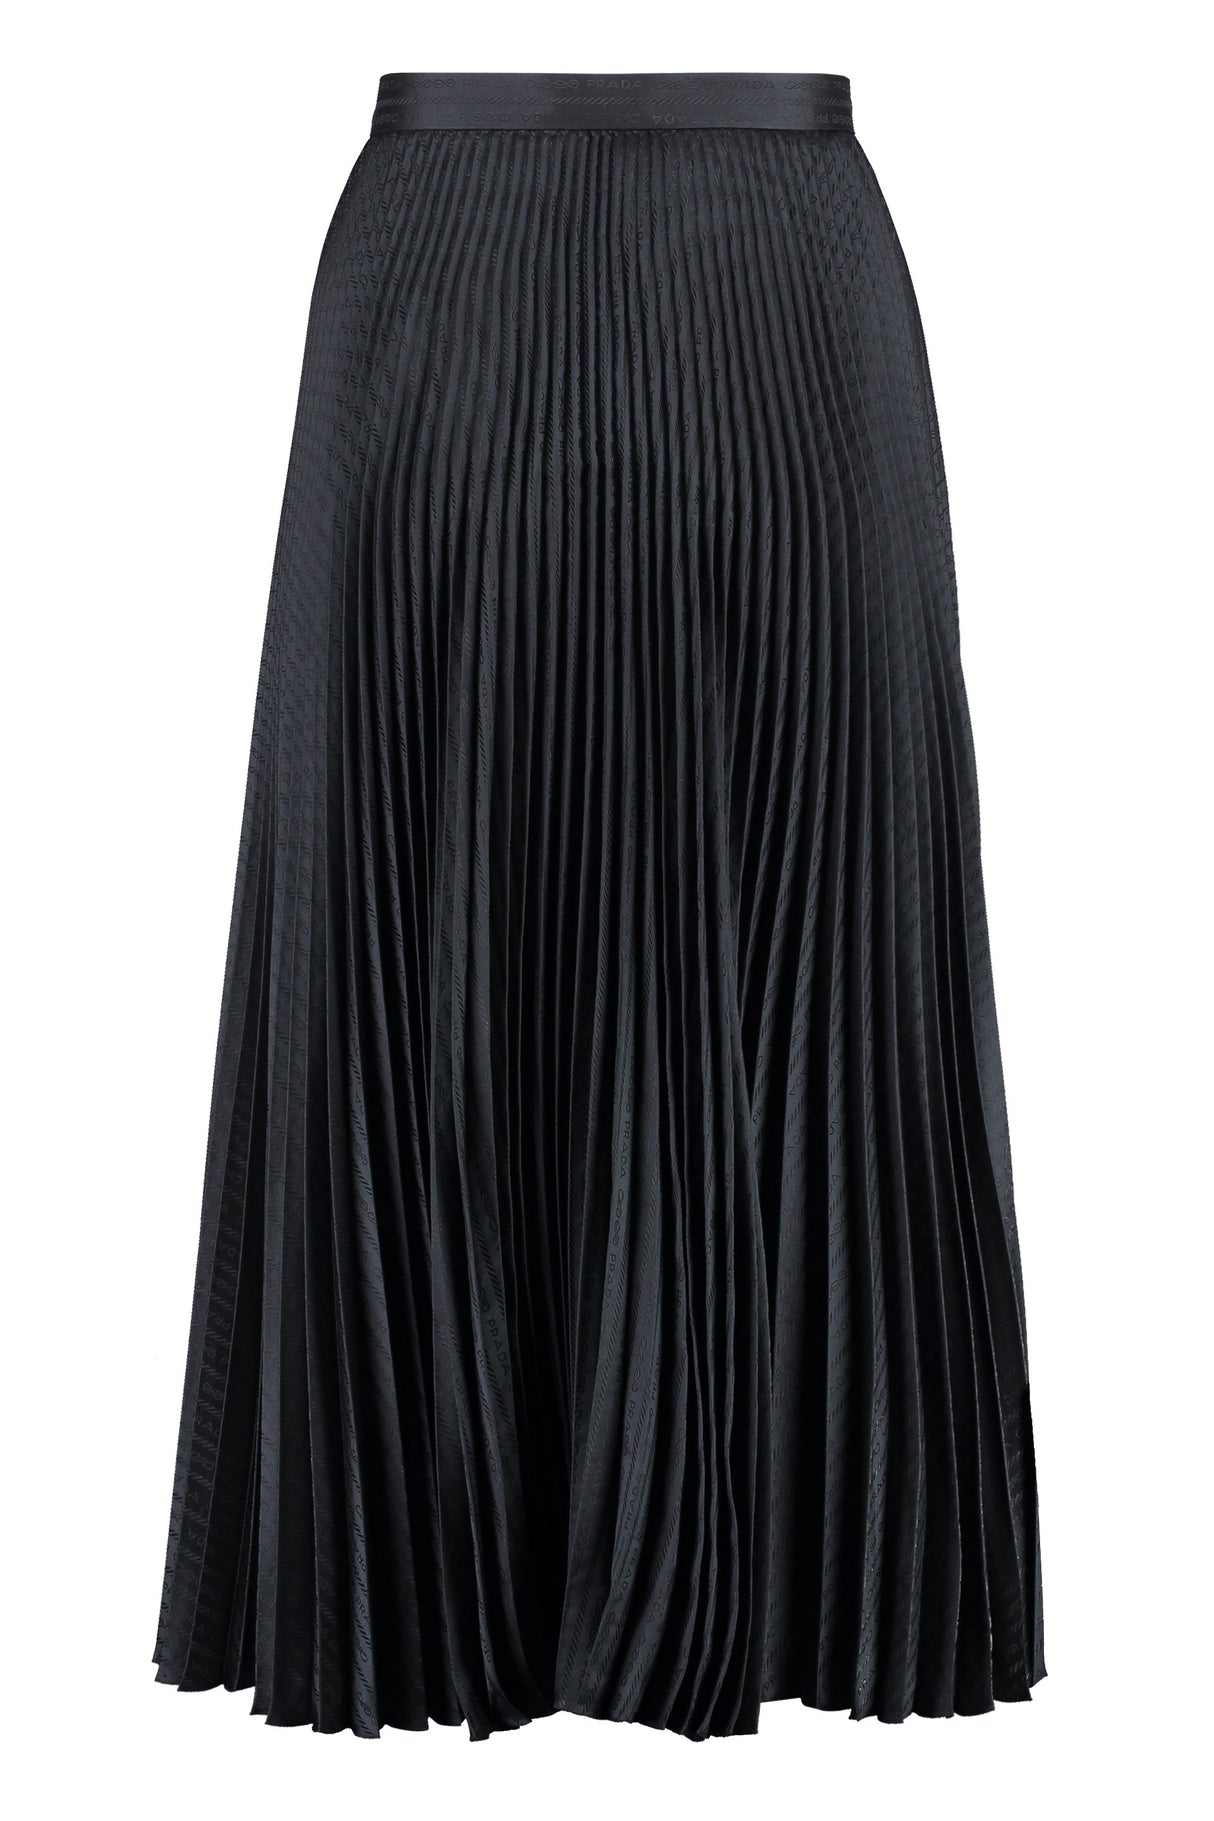 PRADA Chic Black Pleated Skirt in Silk Jacquard for Women - FW22